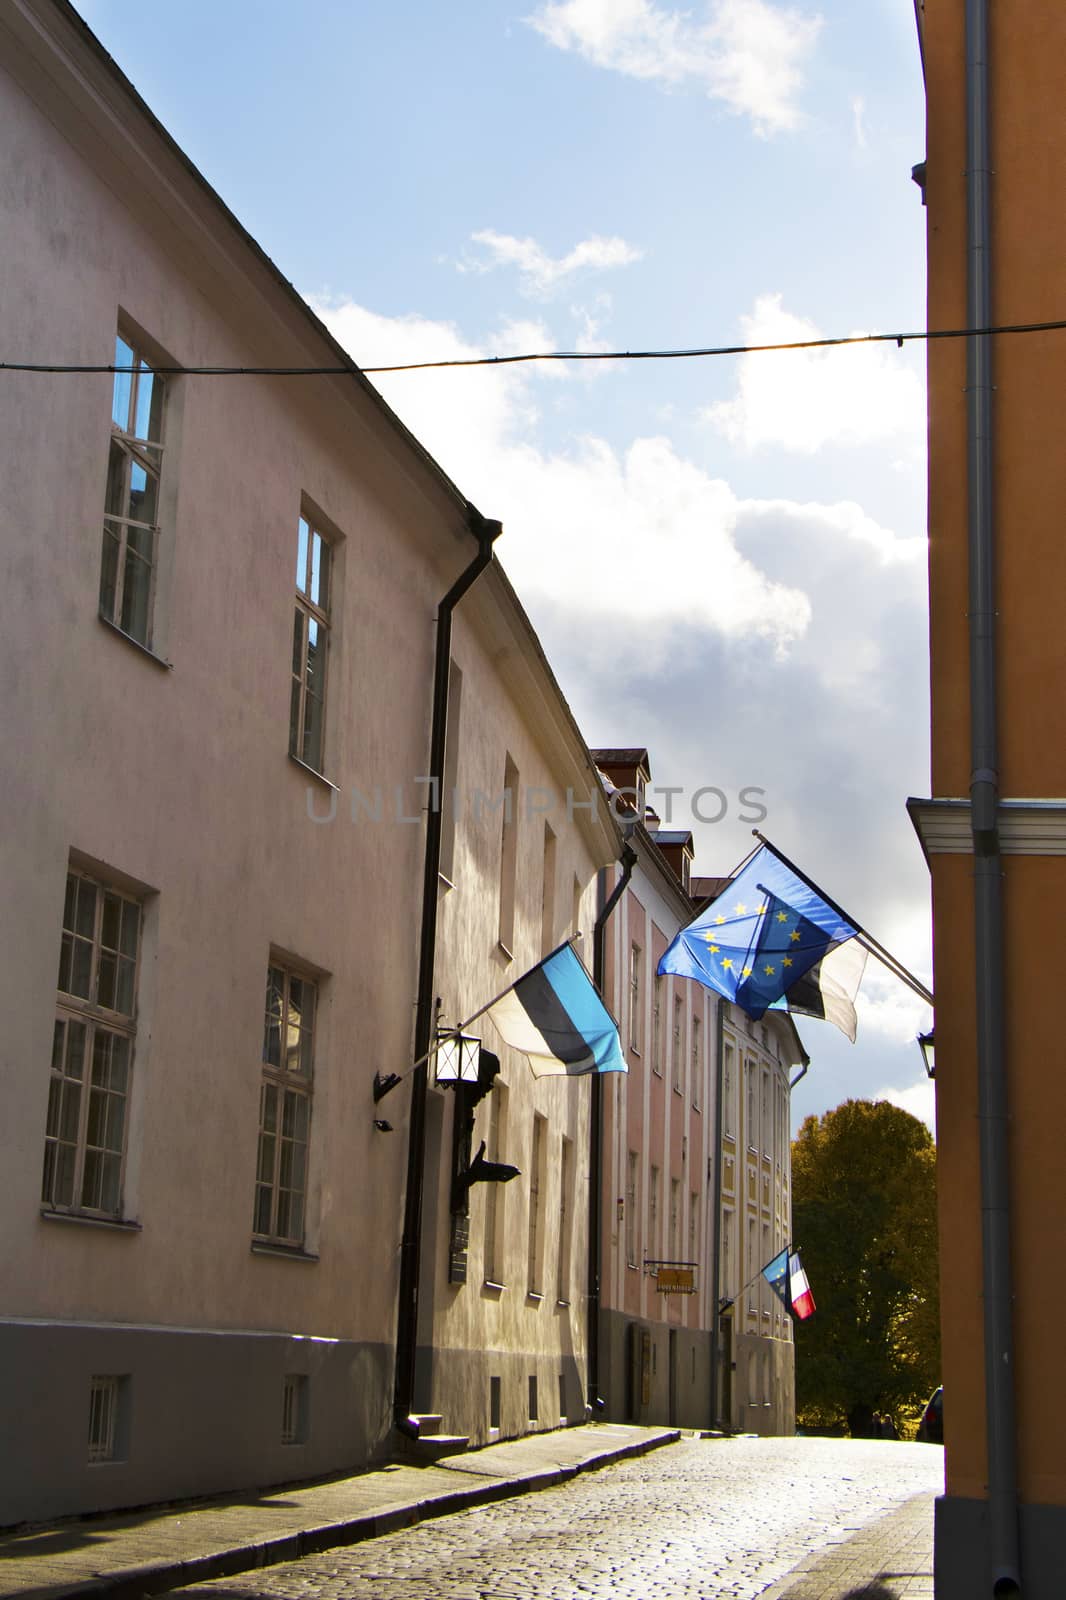 TALLINN, ESTONIA - OCTOBER 20, 2017: Buildings and architecture exterior view in old town of Tallinn, European union flag.